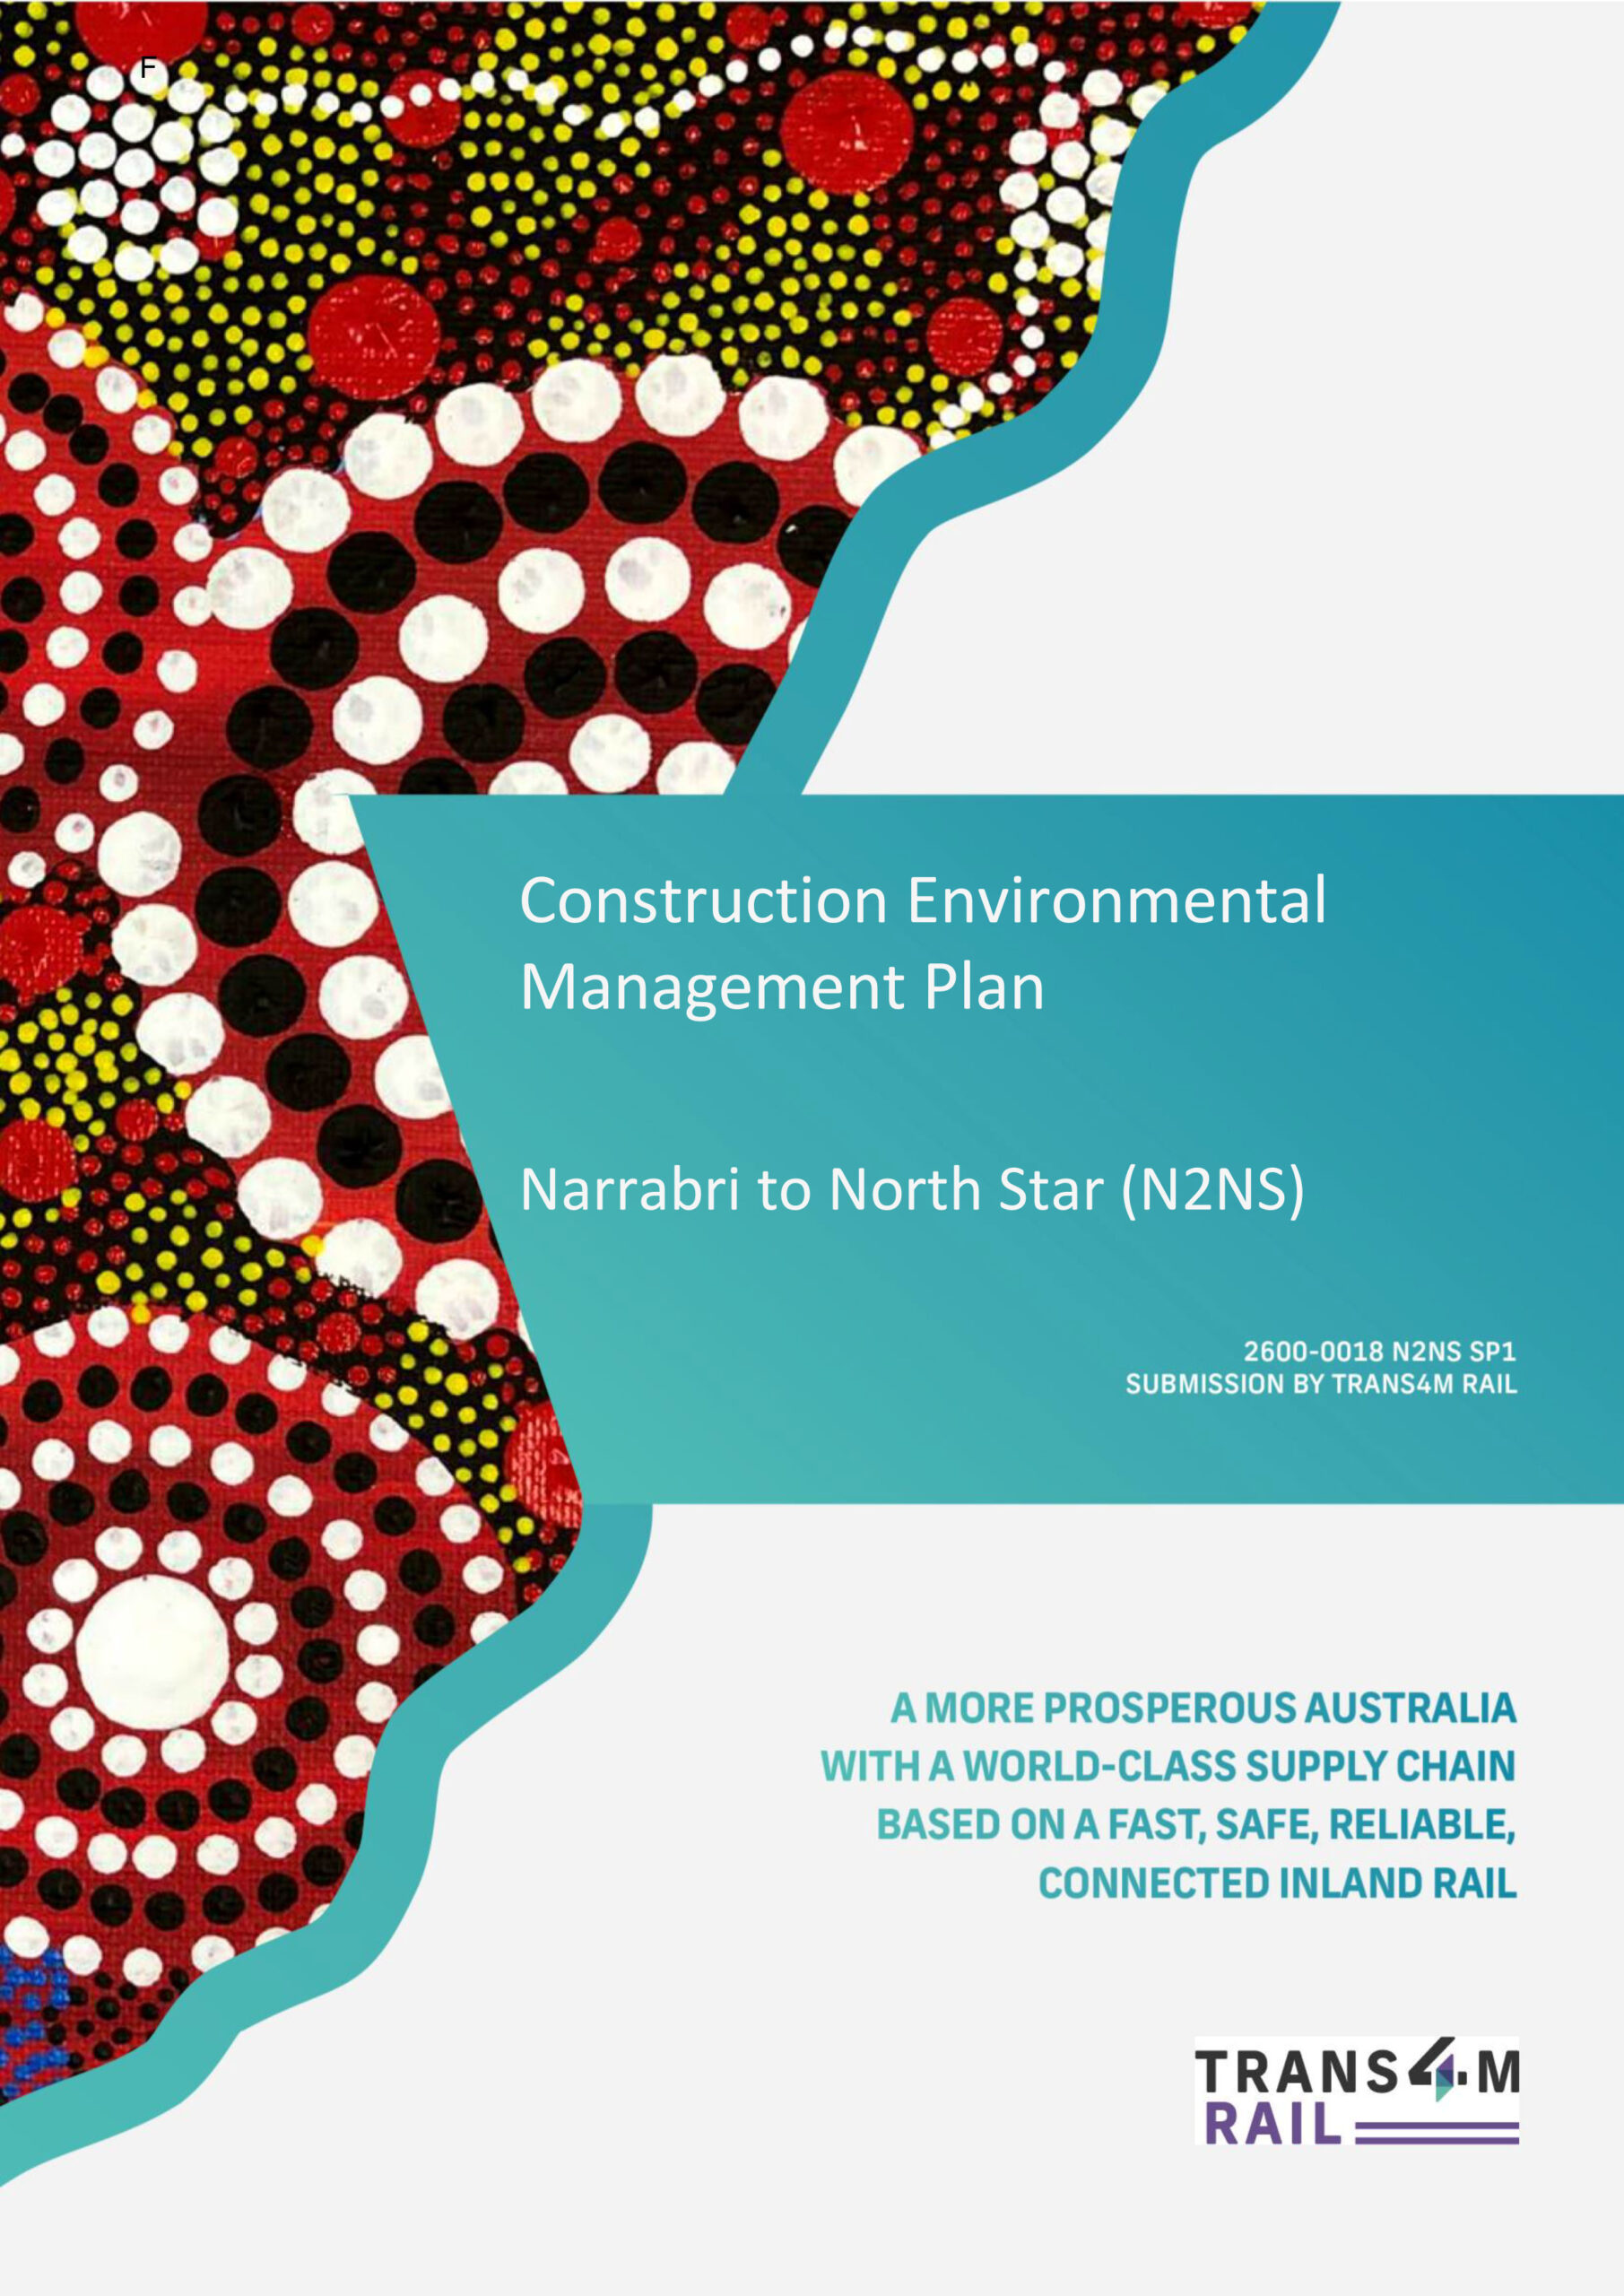 Image thumbnail for Narrabri to North Star Phase 1 Construction Environmental Management Plan